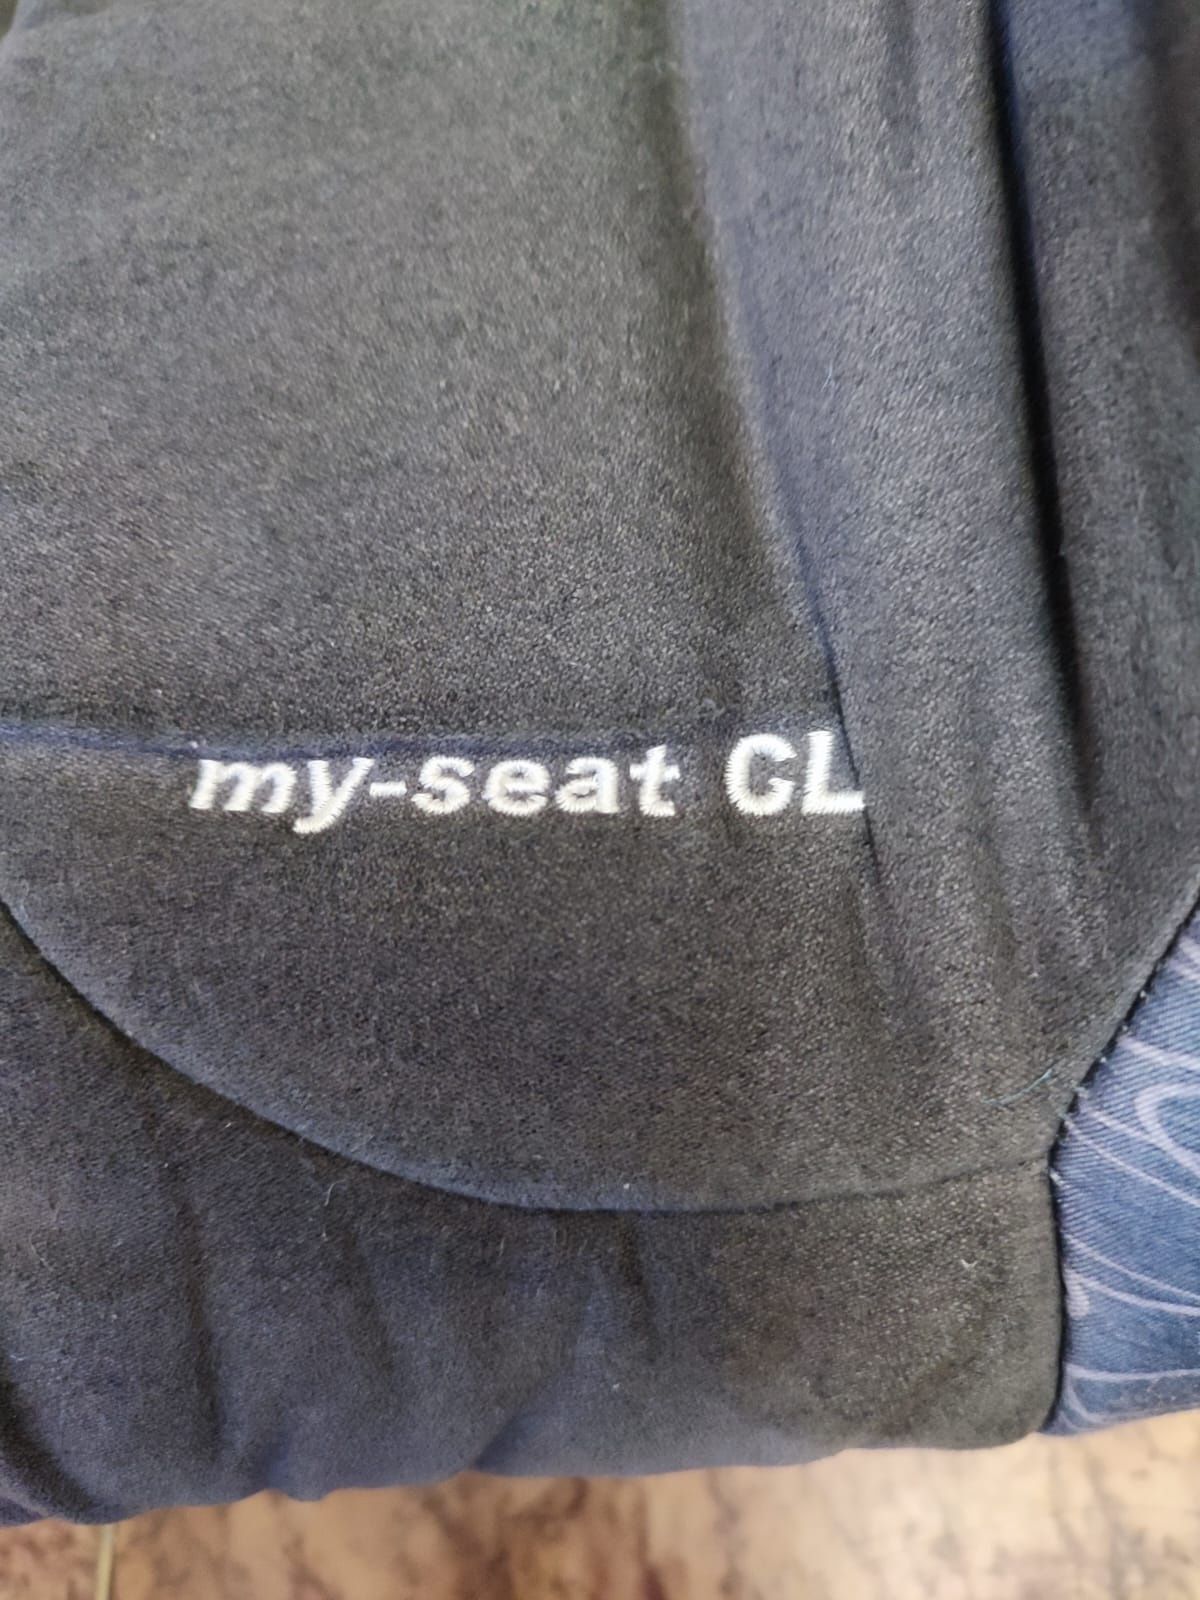 Детское автокресло STM My Seat CL(Storchenmuhle бренд) 3-12лет(15-36кг